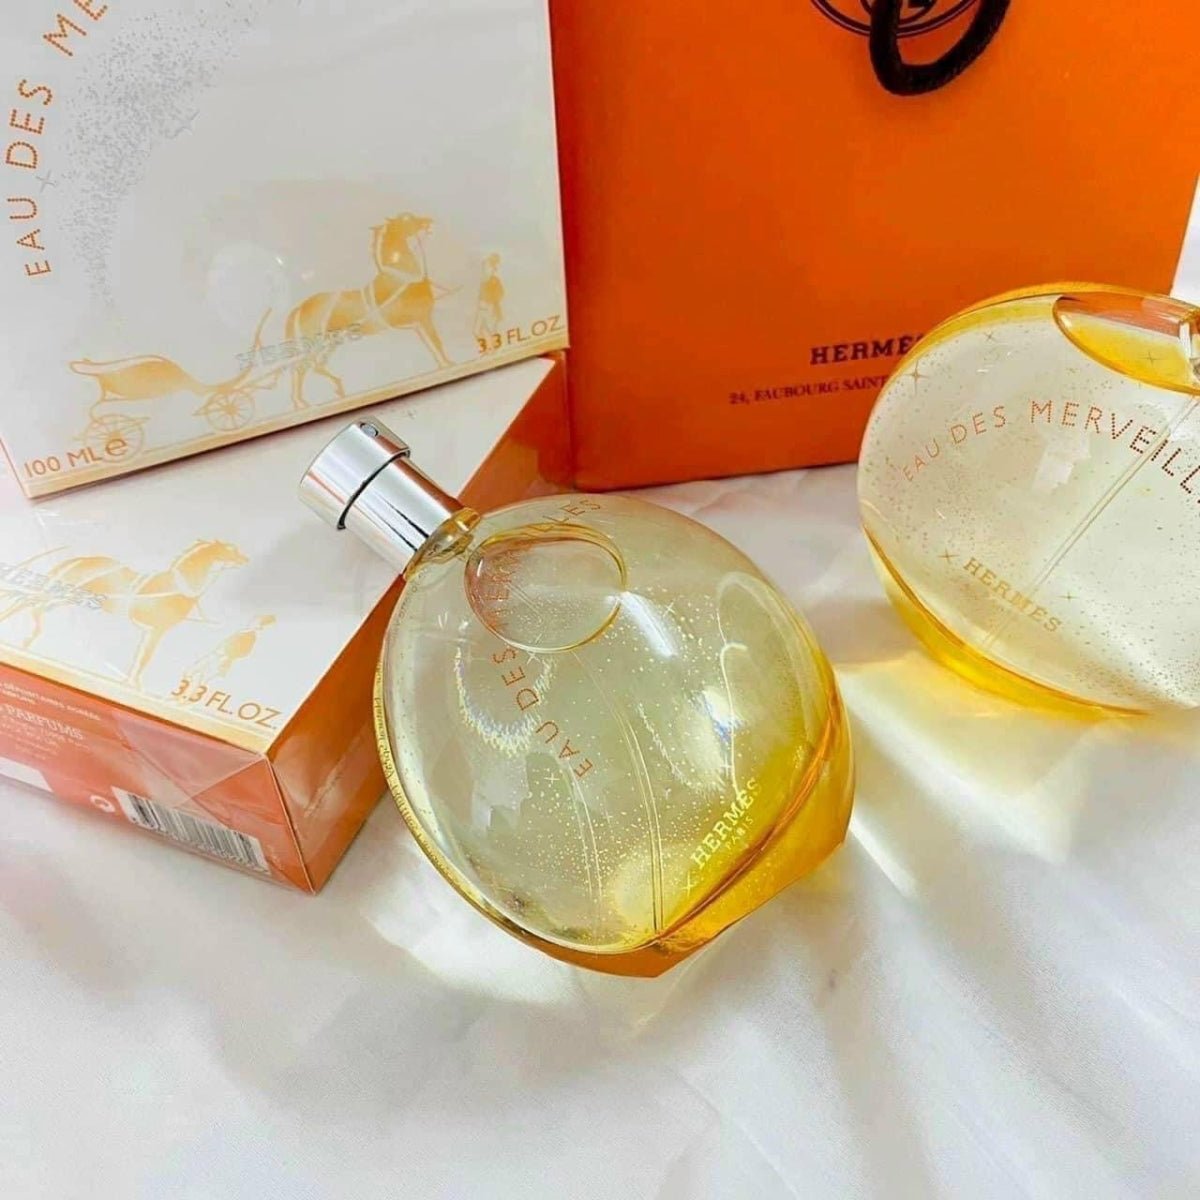 Hermes Eau Des Merveilles Deodorant Spray | My Perfume Shop Australia